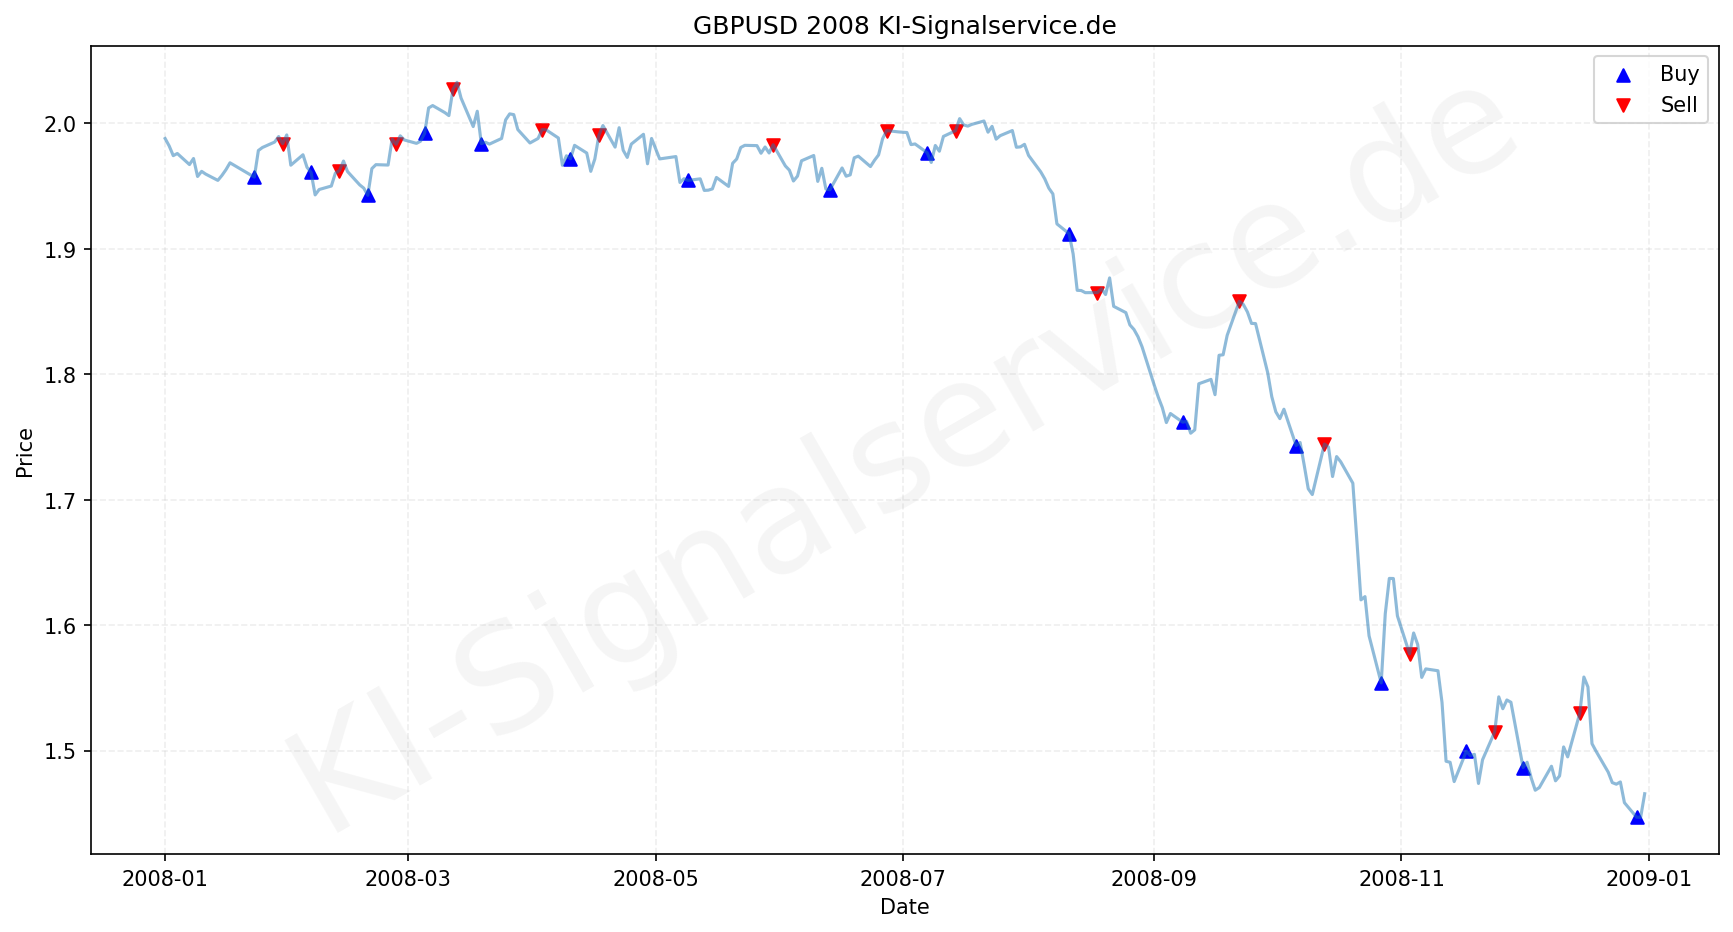 GBPUSD Chart - KI Tradingsignale 2008